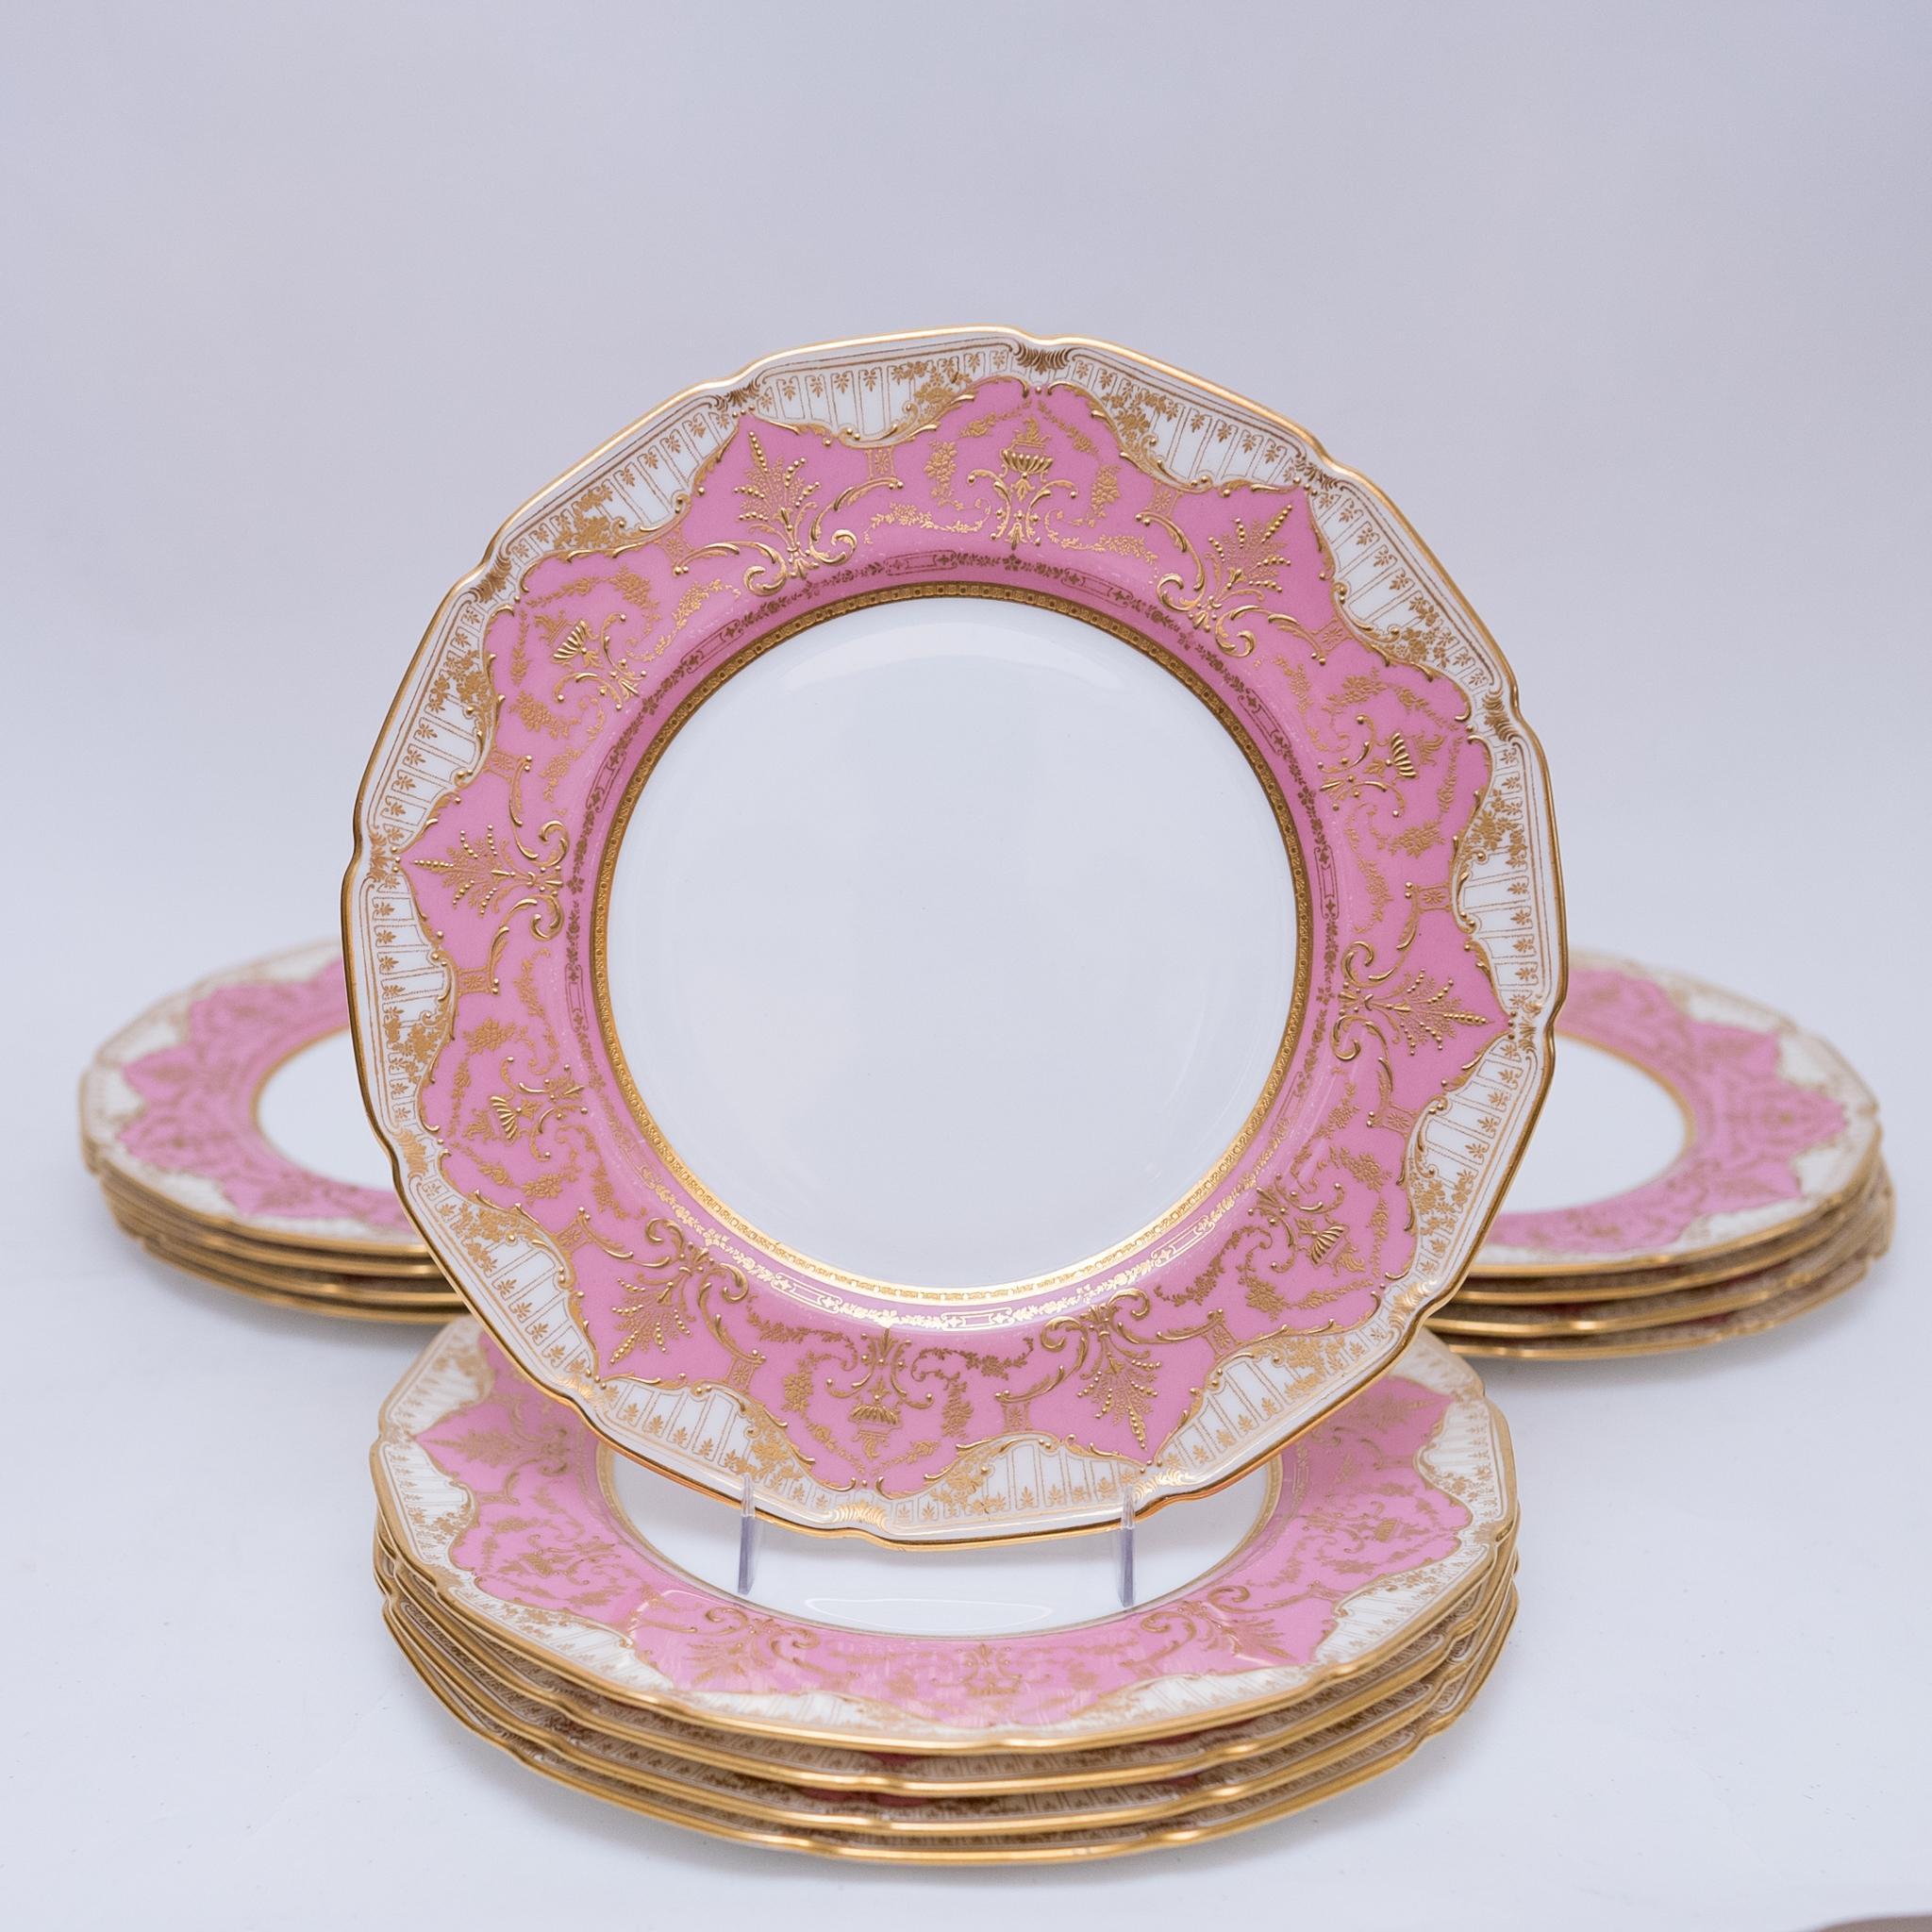 British Set of 13 Antique English Dinner Plates circa 1910, Raised Gilding on Pink